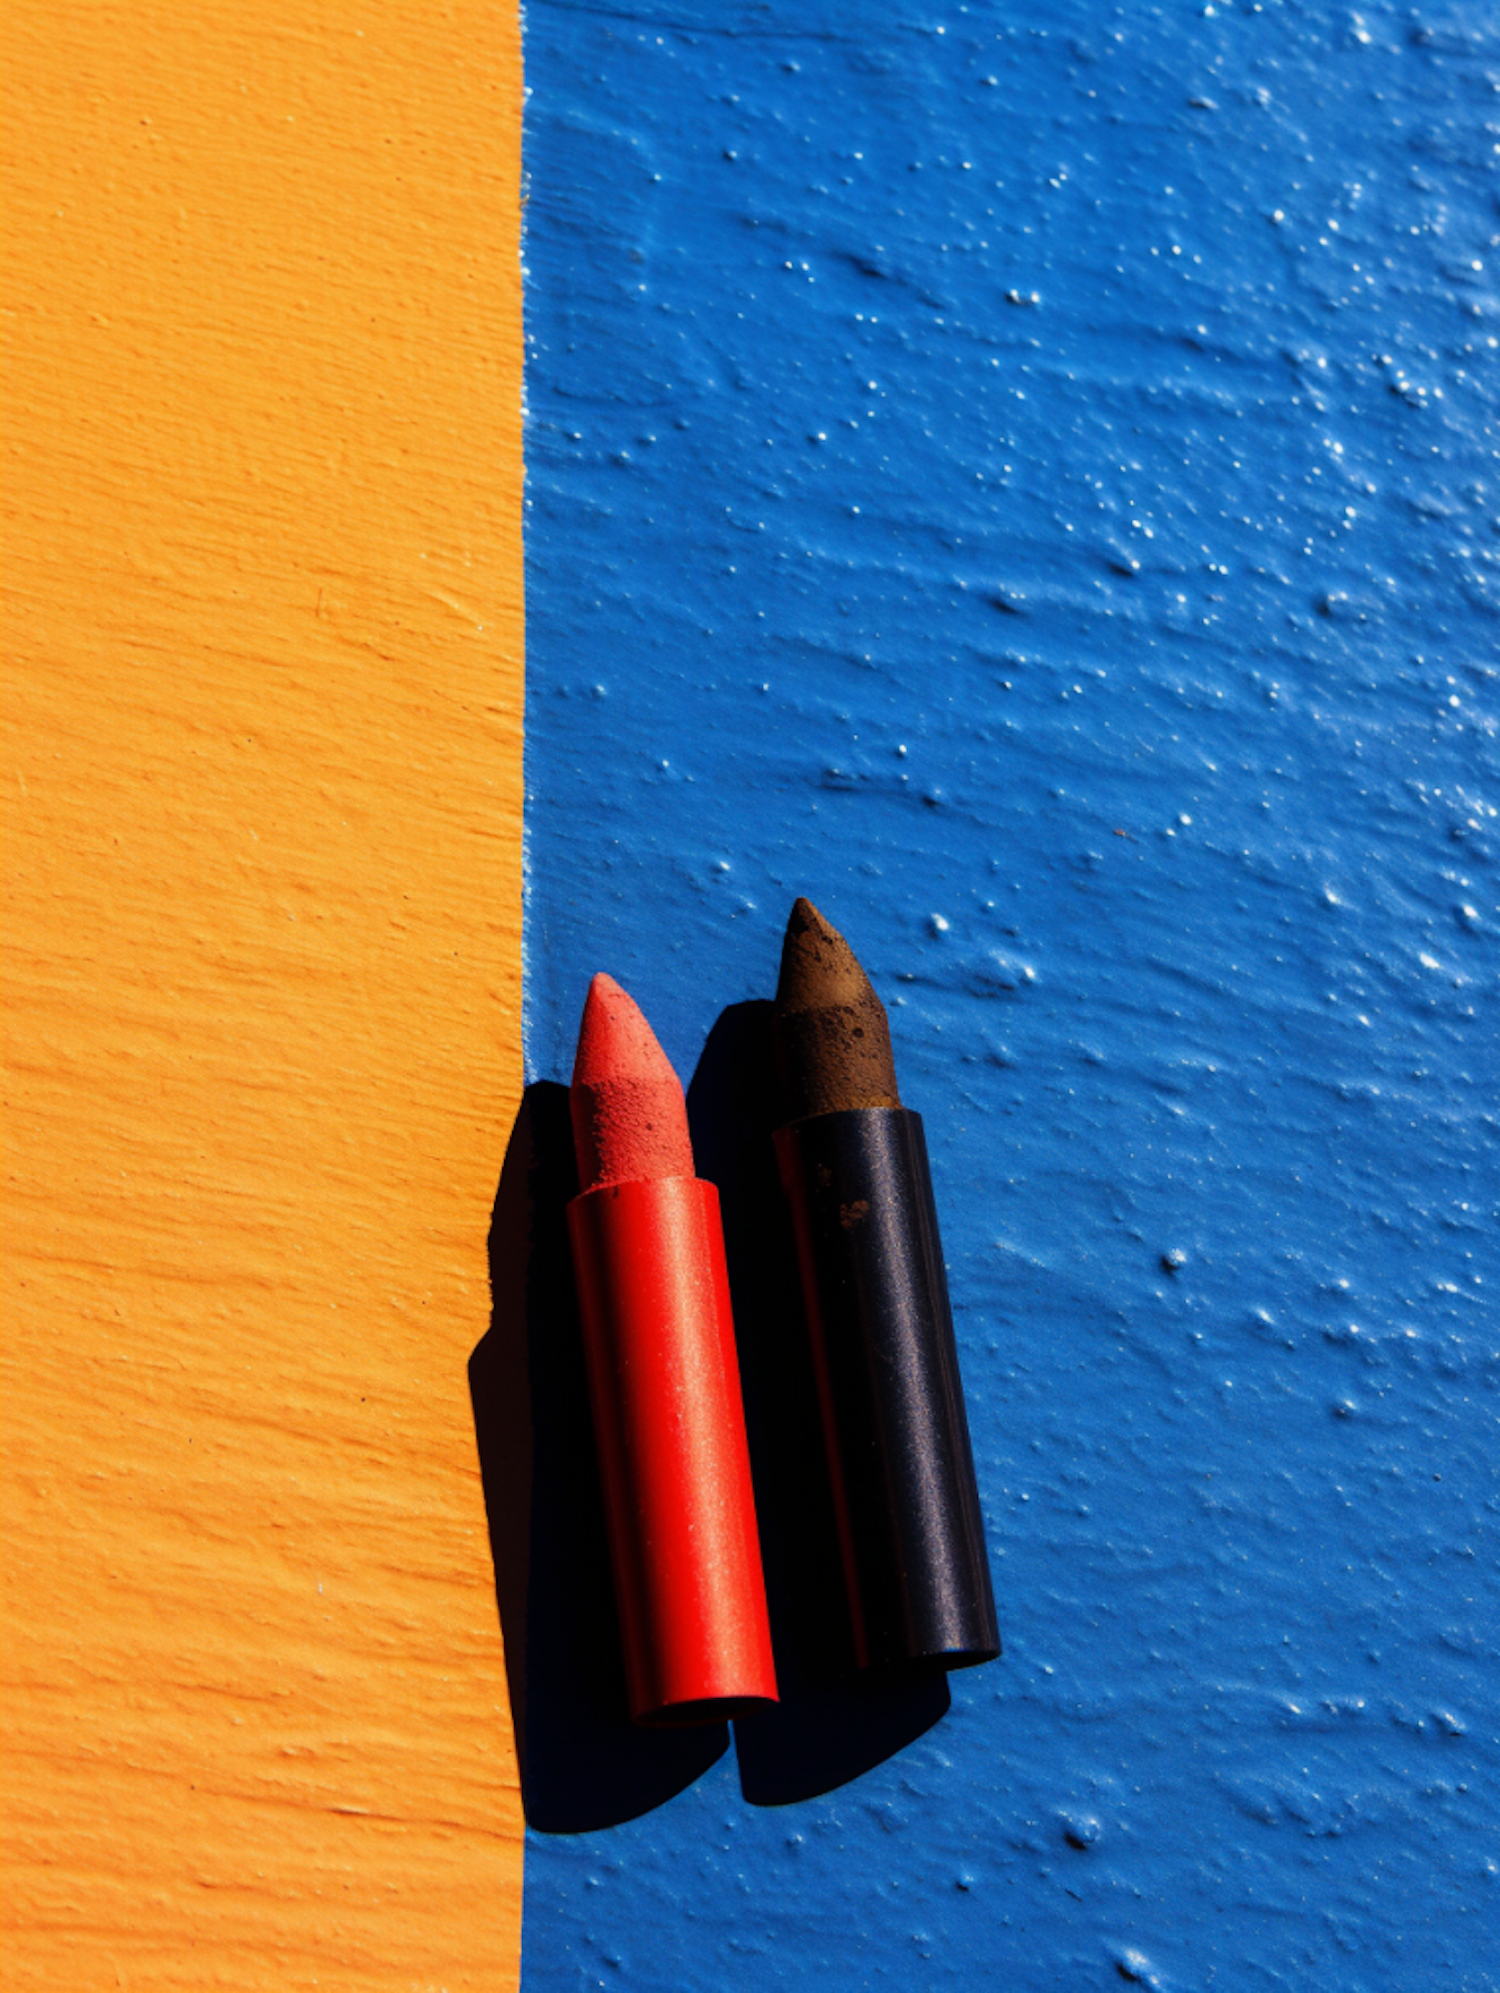 Dual Tones: The Crayons' Contrast